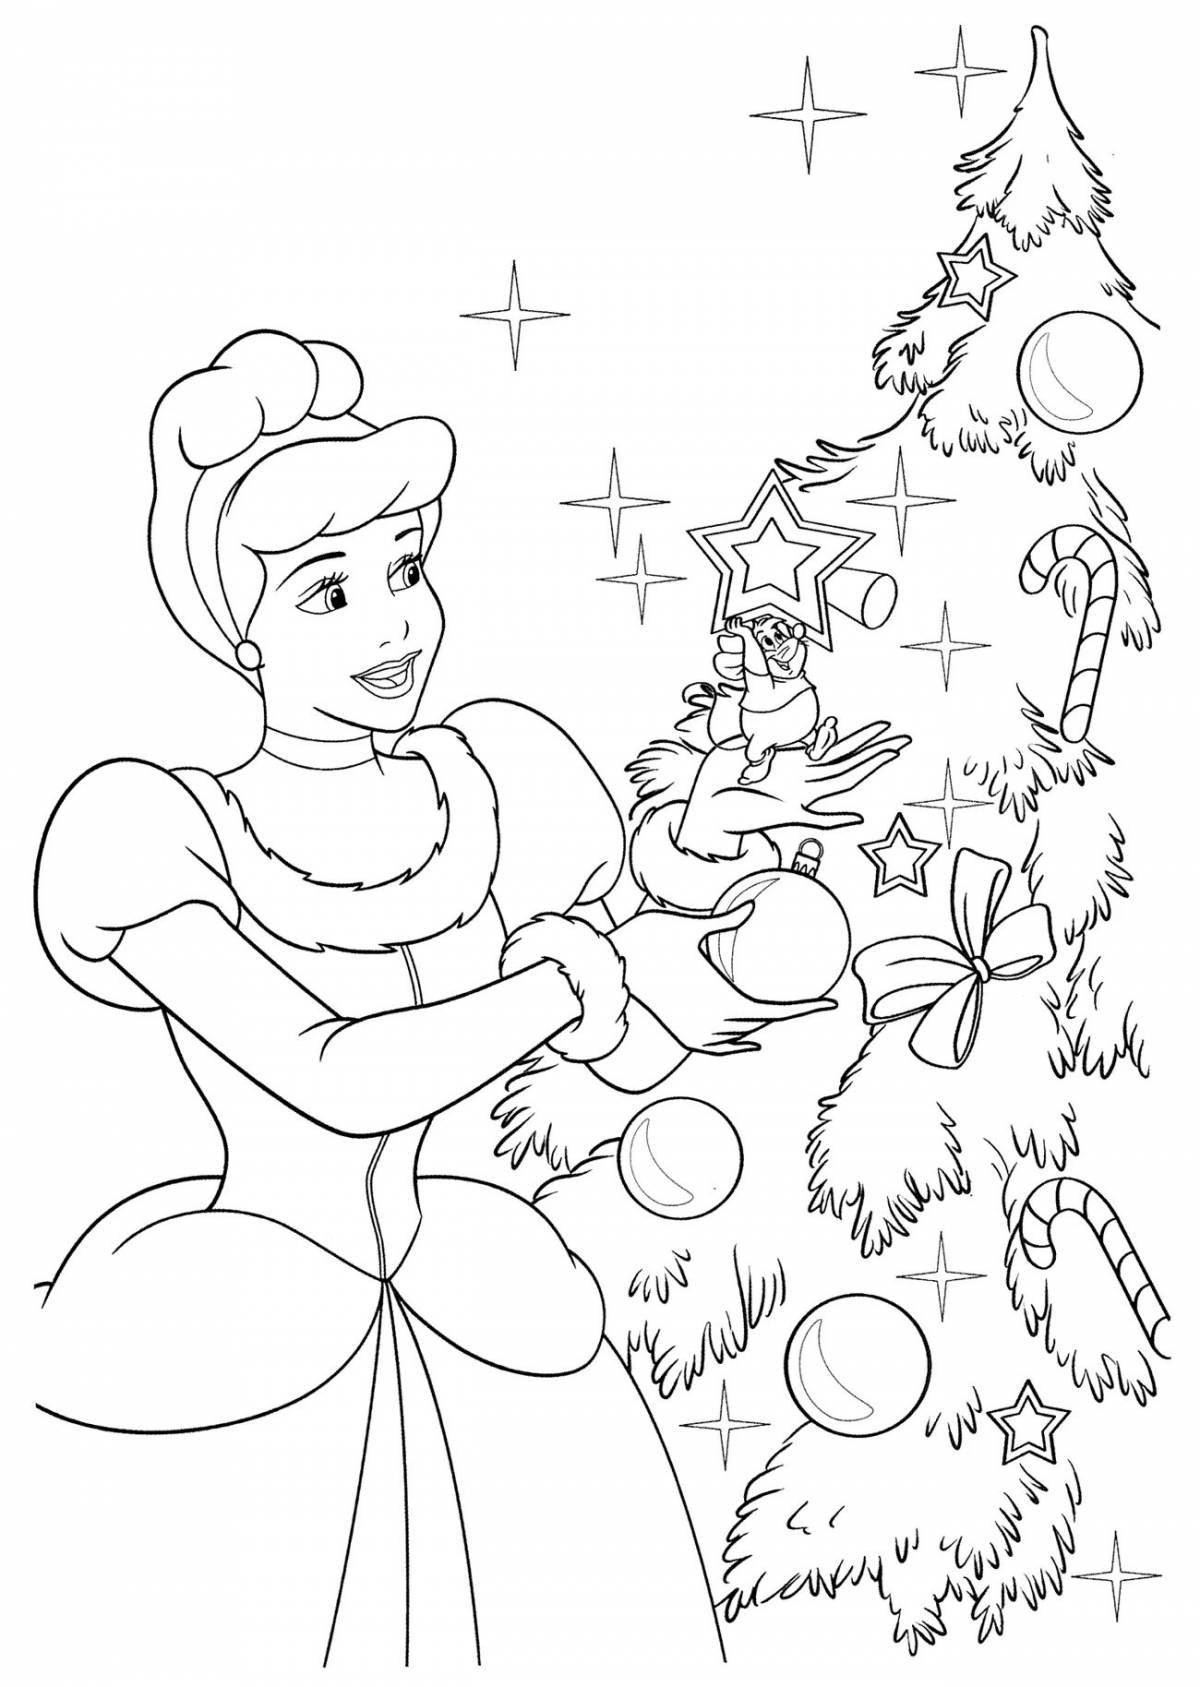 Disney glowing Christmas coloring book